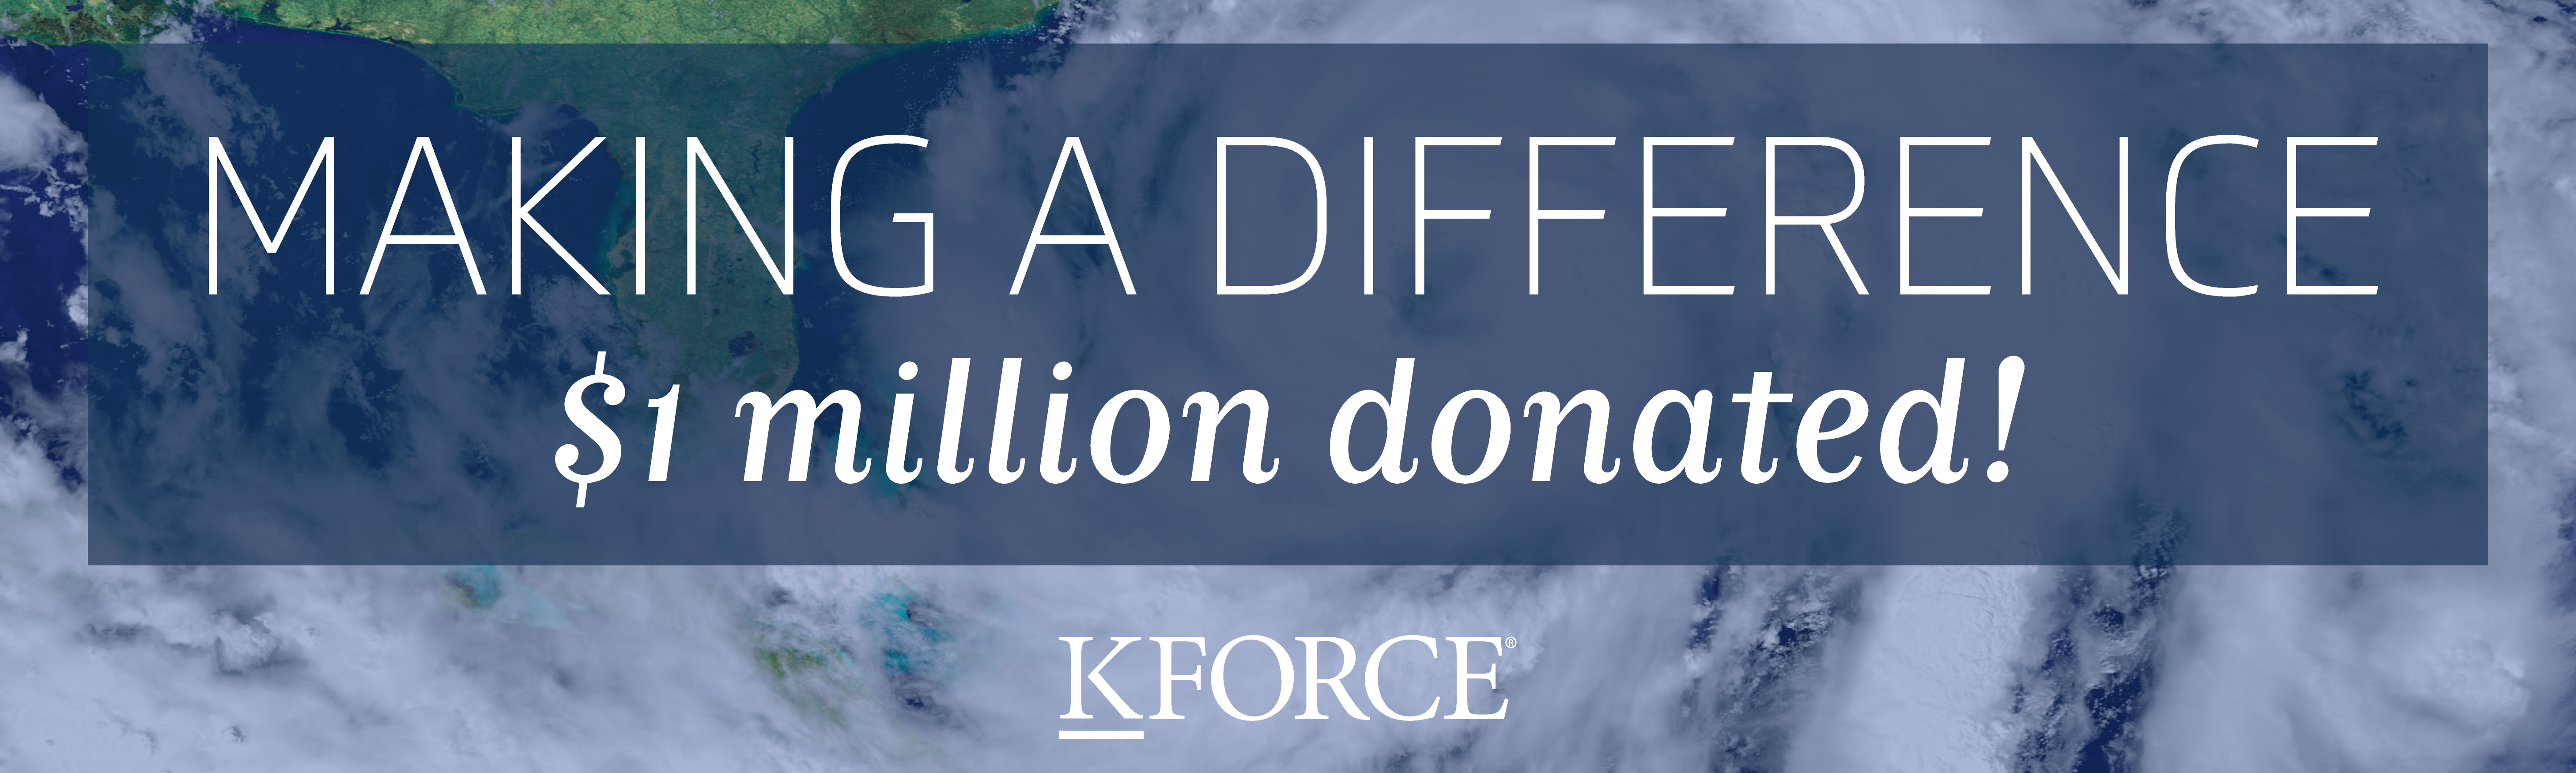 Kforc reaches $1 million!